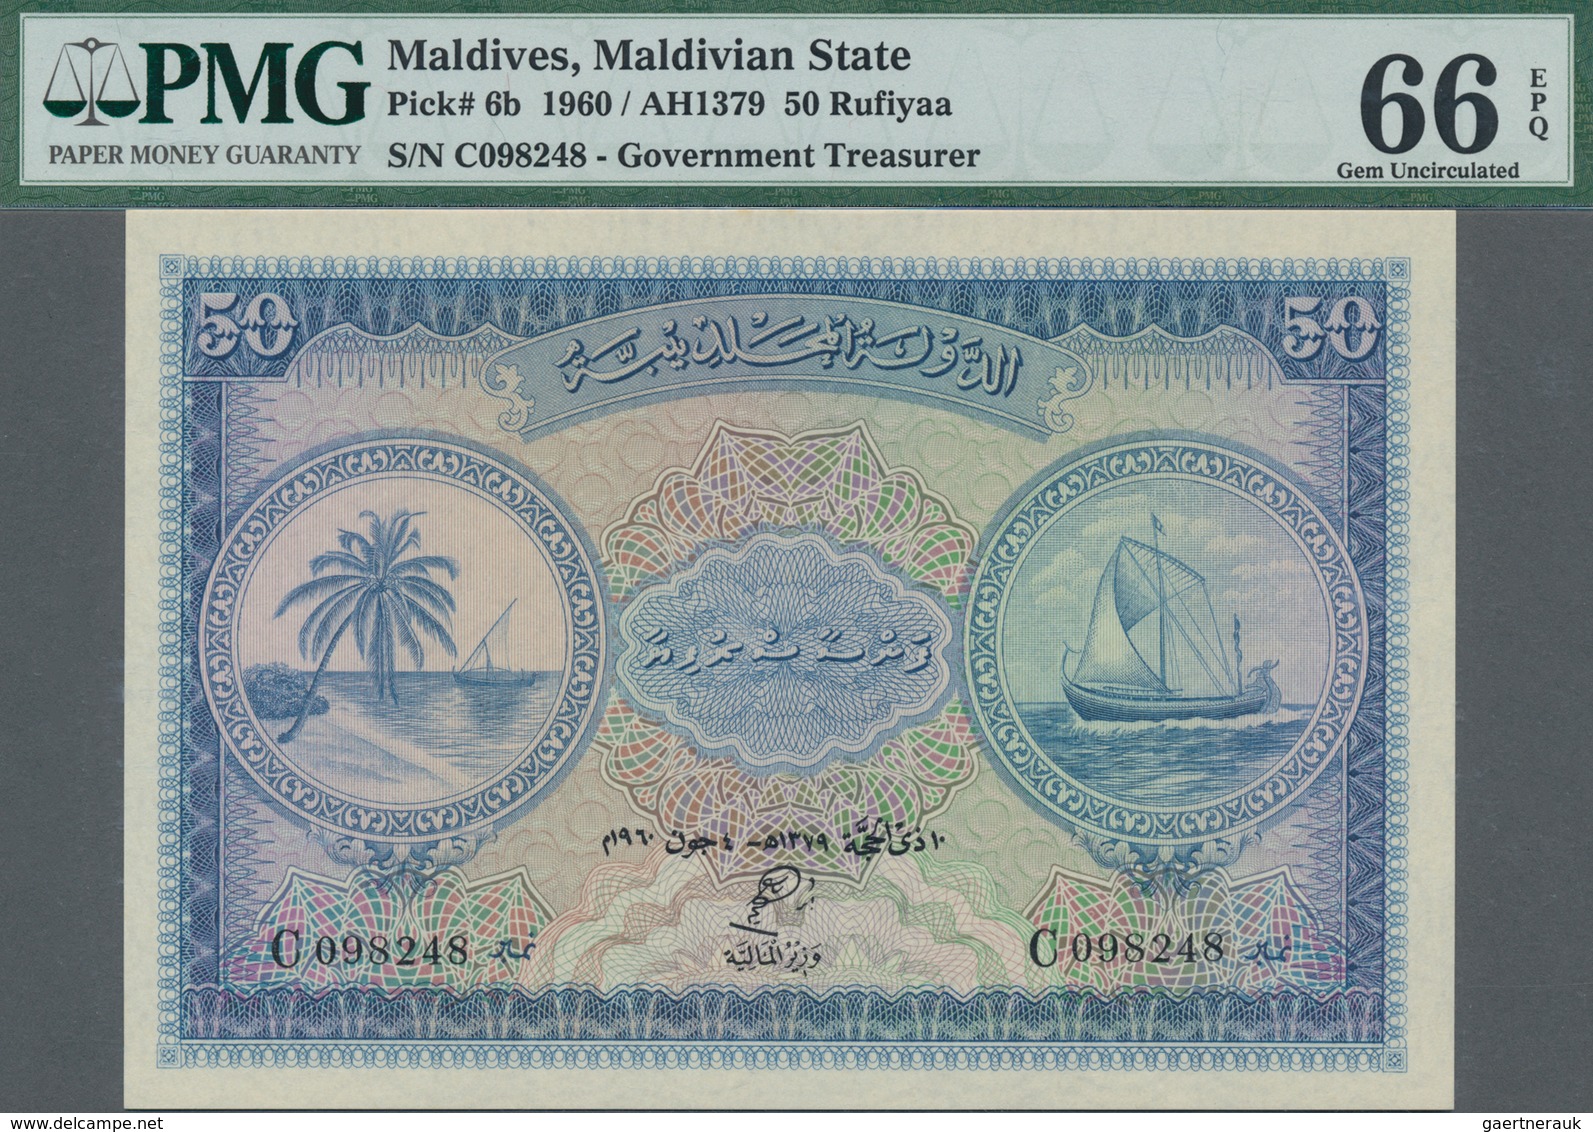 Maldives / Malediven: Maldivian State 50 Rufiyaa 1960, P.6b, Perfect Condition, PMG 66 Gem Uncircula - Maldiven